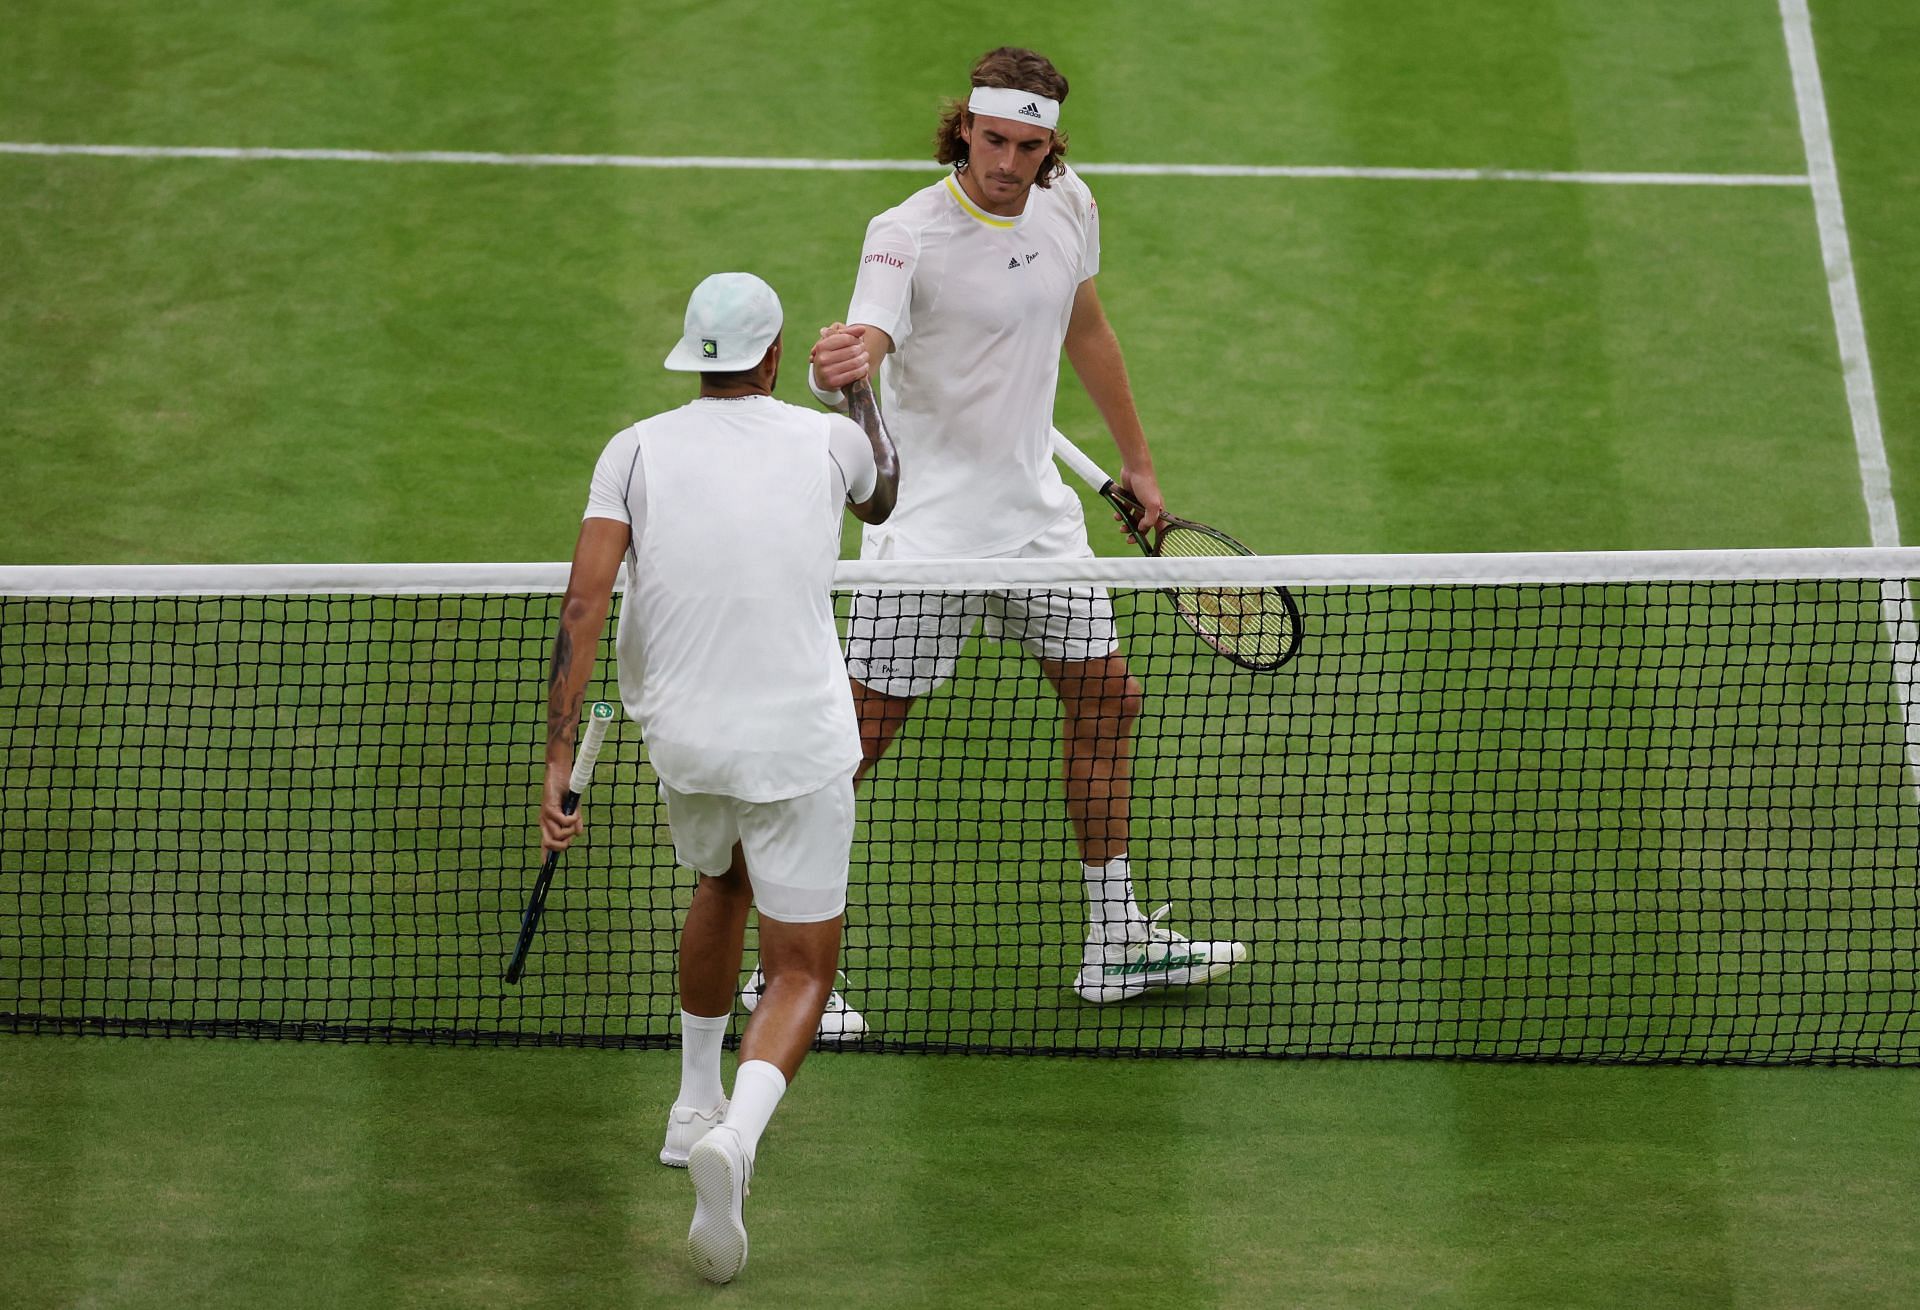 Nick Kyrgios and Stefanos Tsitsipas after their match at 2022 Wimbledon